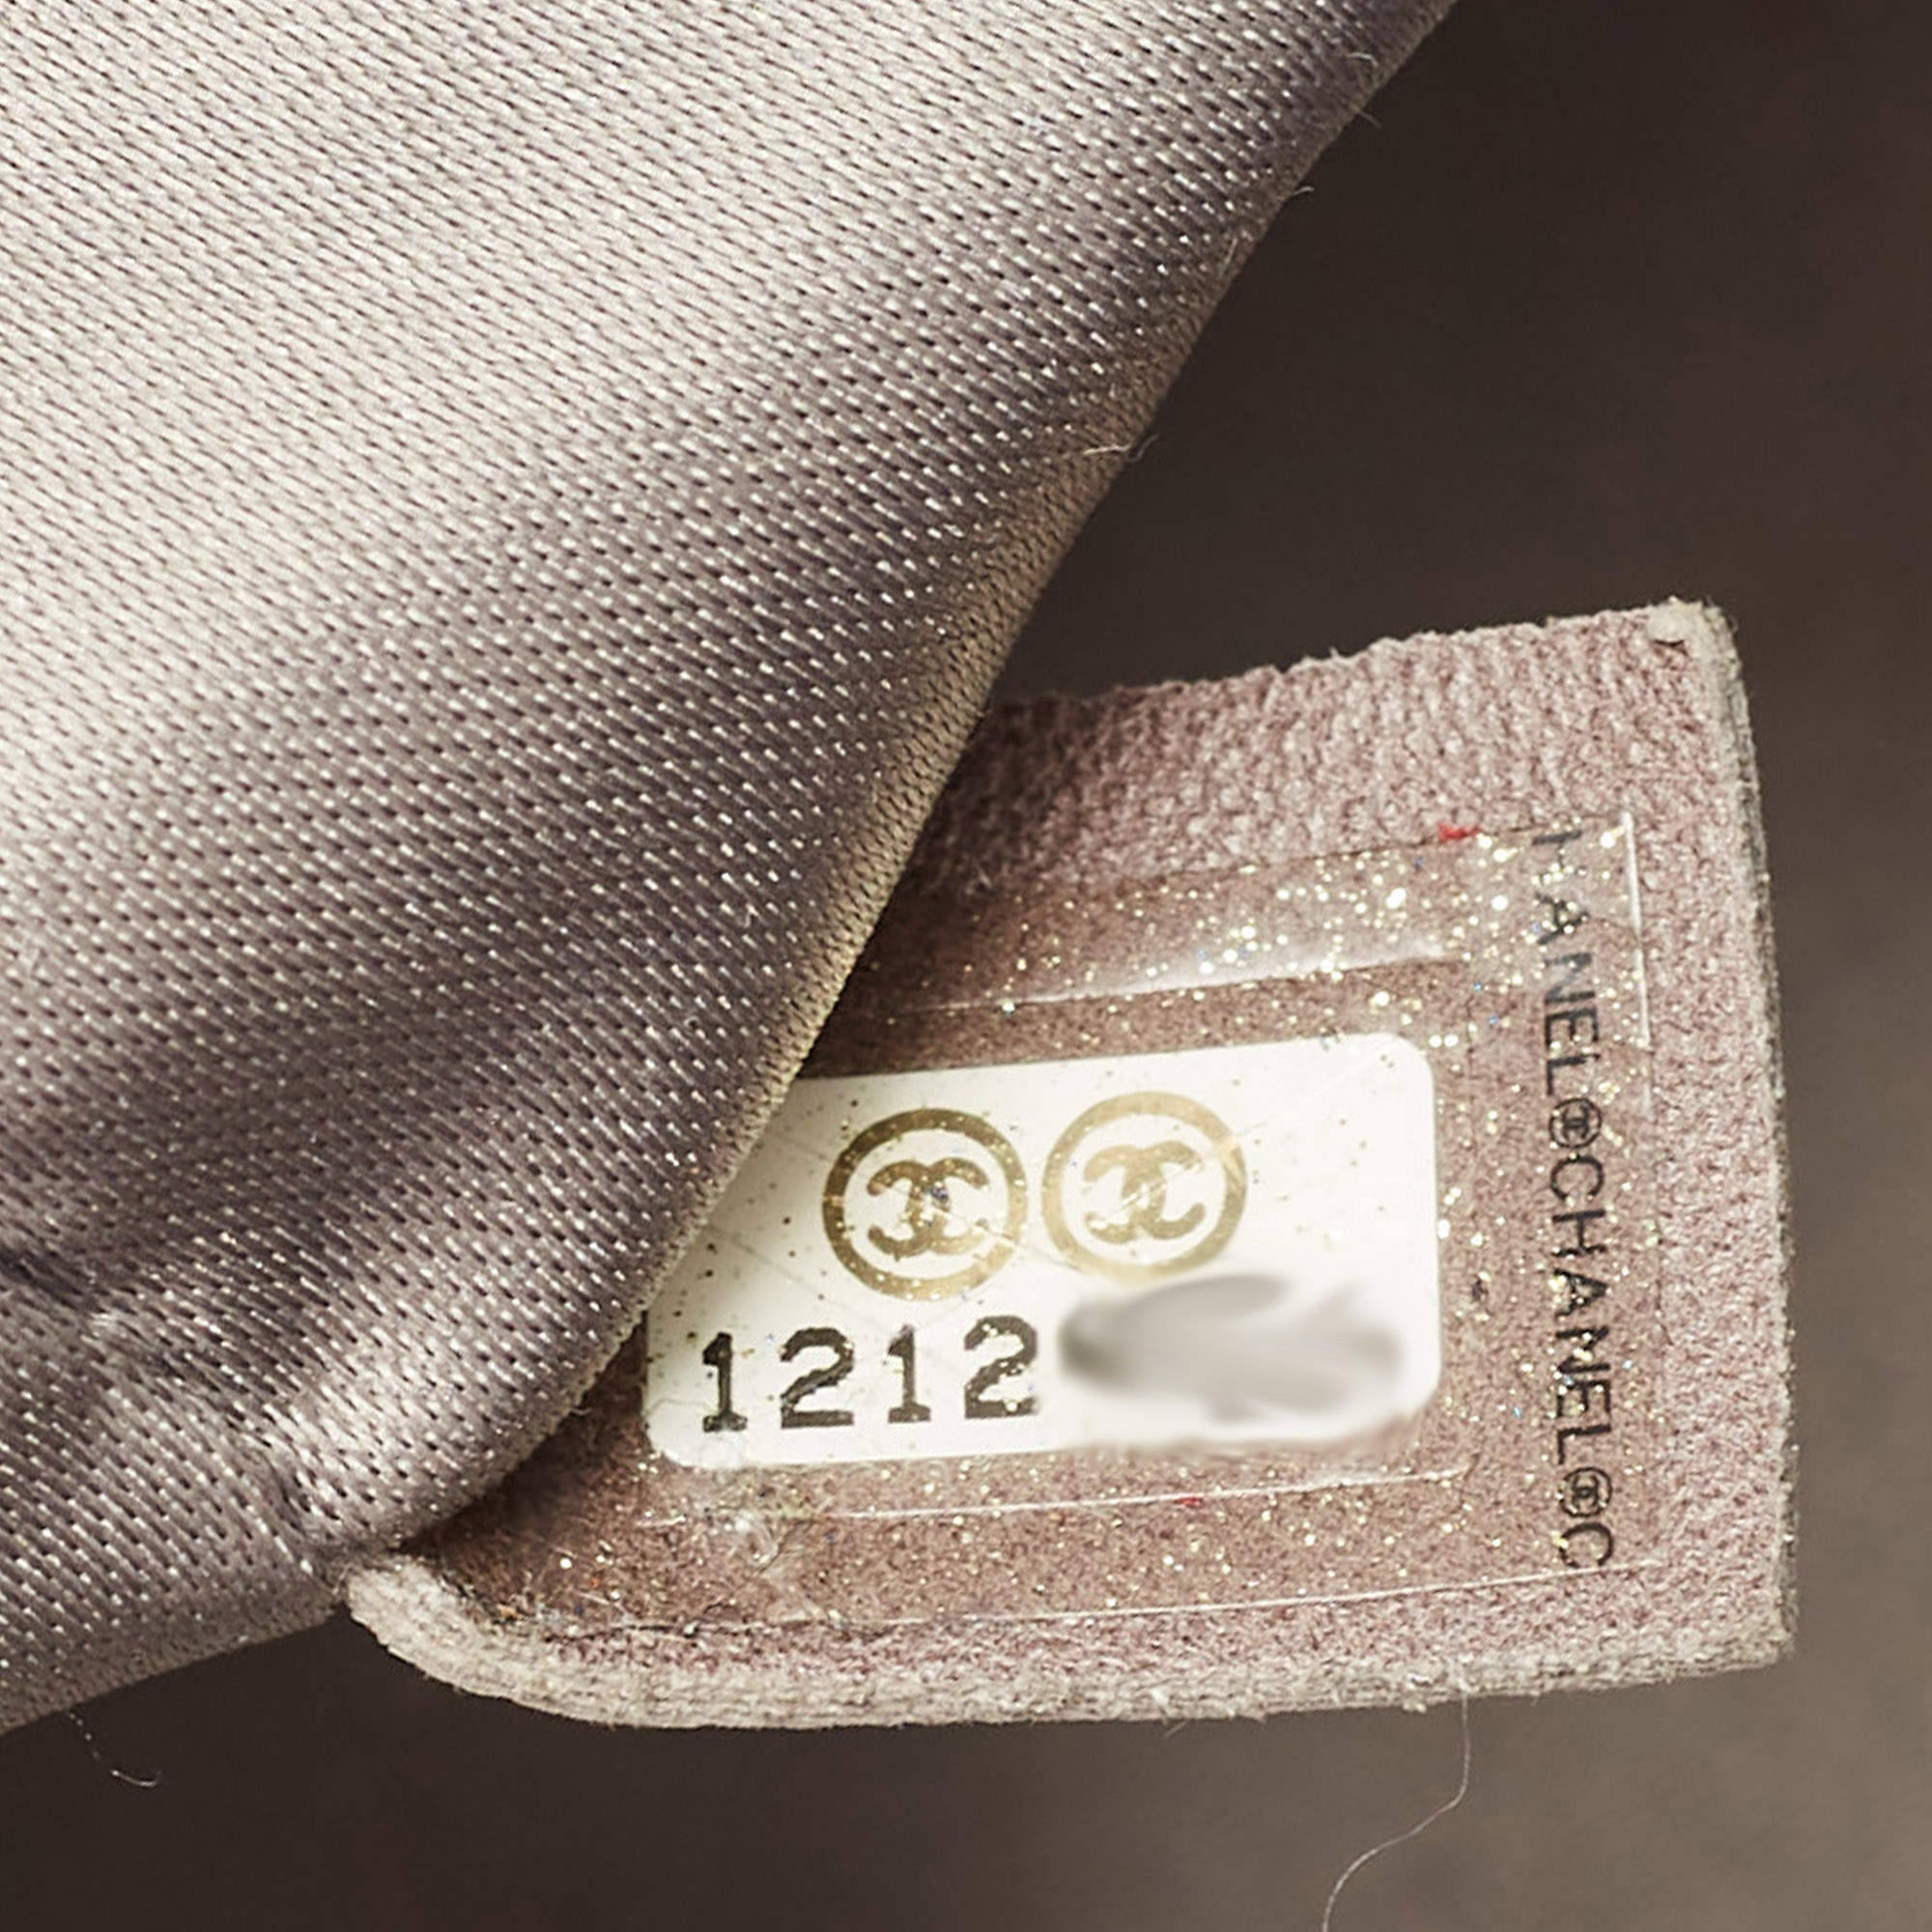 Chanel A31405 Luxe Ligne Bowler Metallic Bronze Calfskin Shoulder Bags SHW